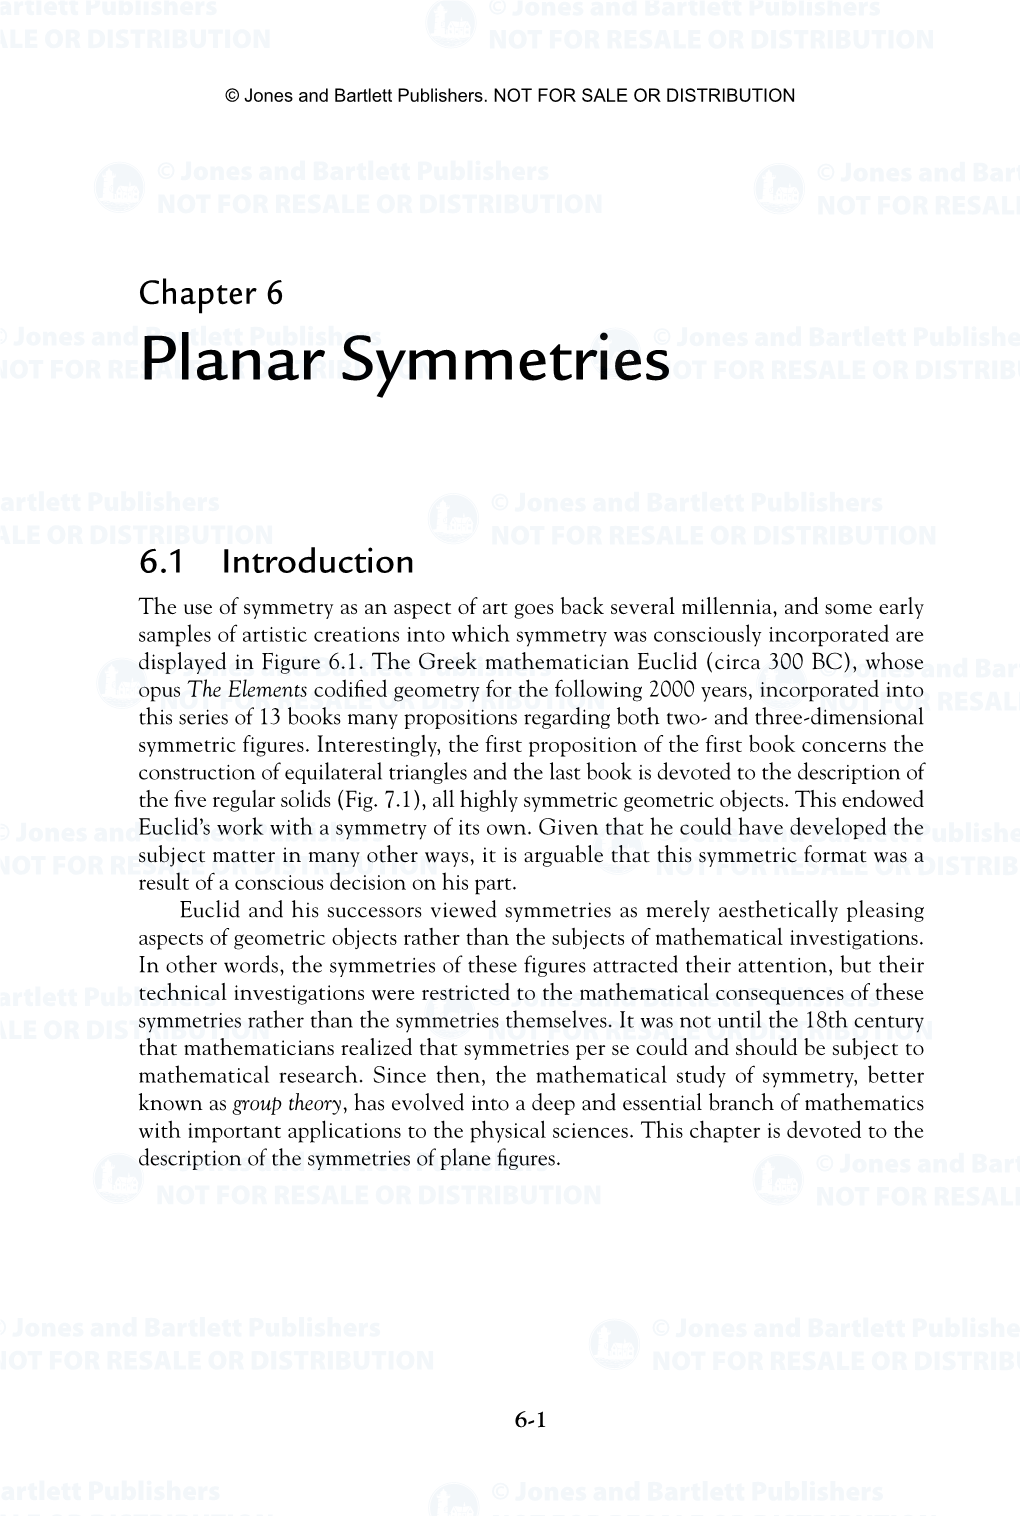 Planar Symmetries